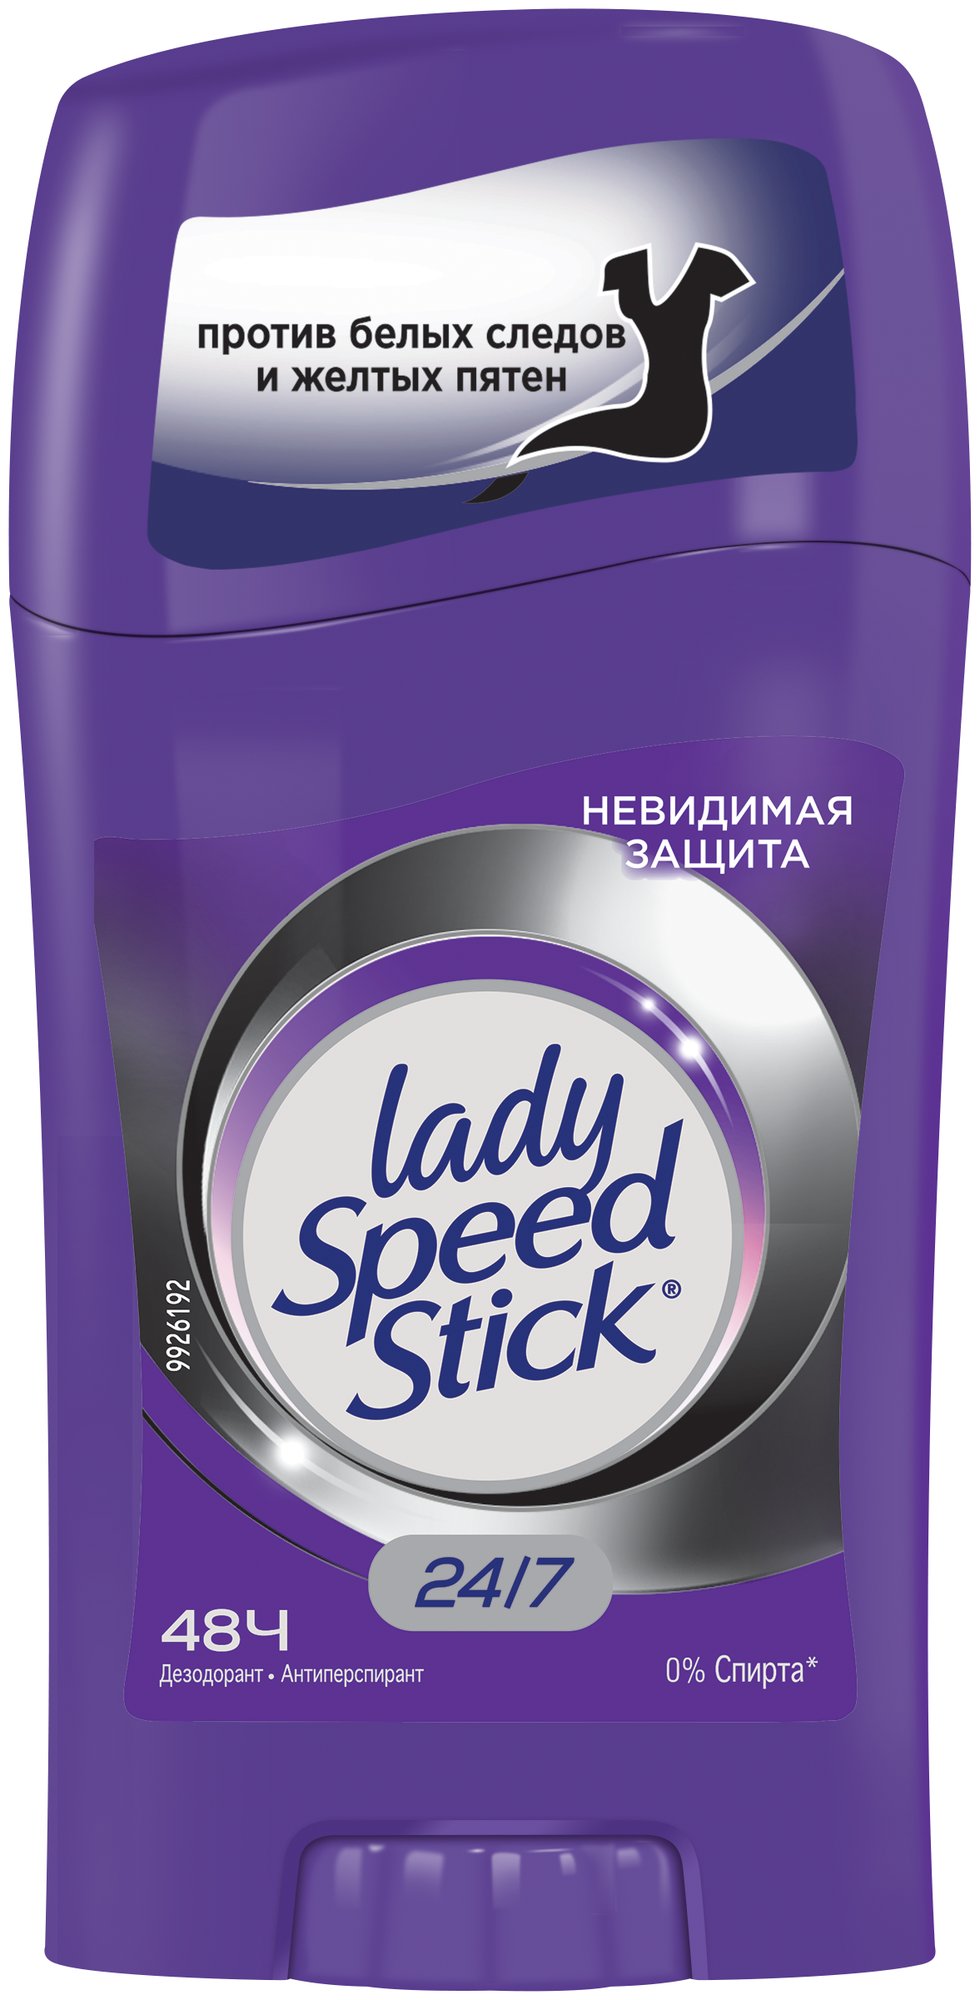 Леди Спид Стик / Lady Speed Stick Невидимая защита 24/7 твердый дезодорант 45 грамм